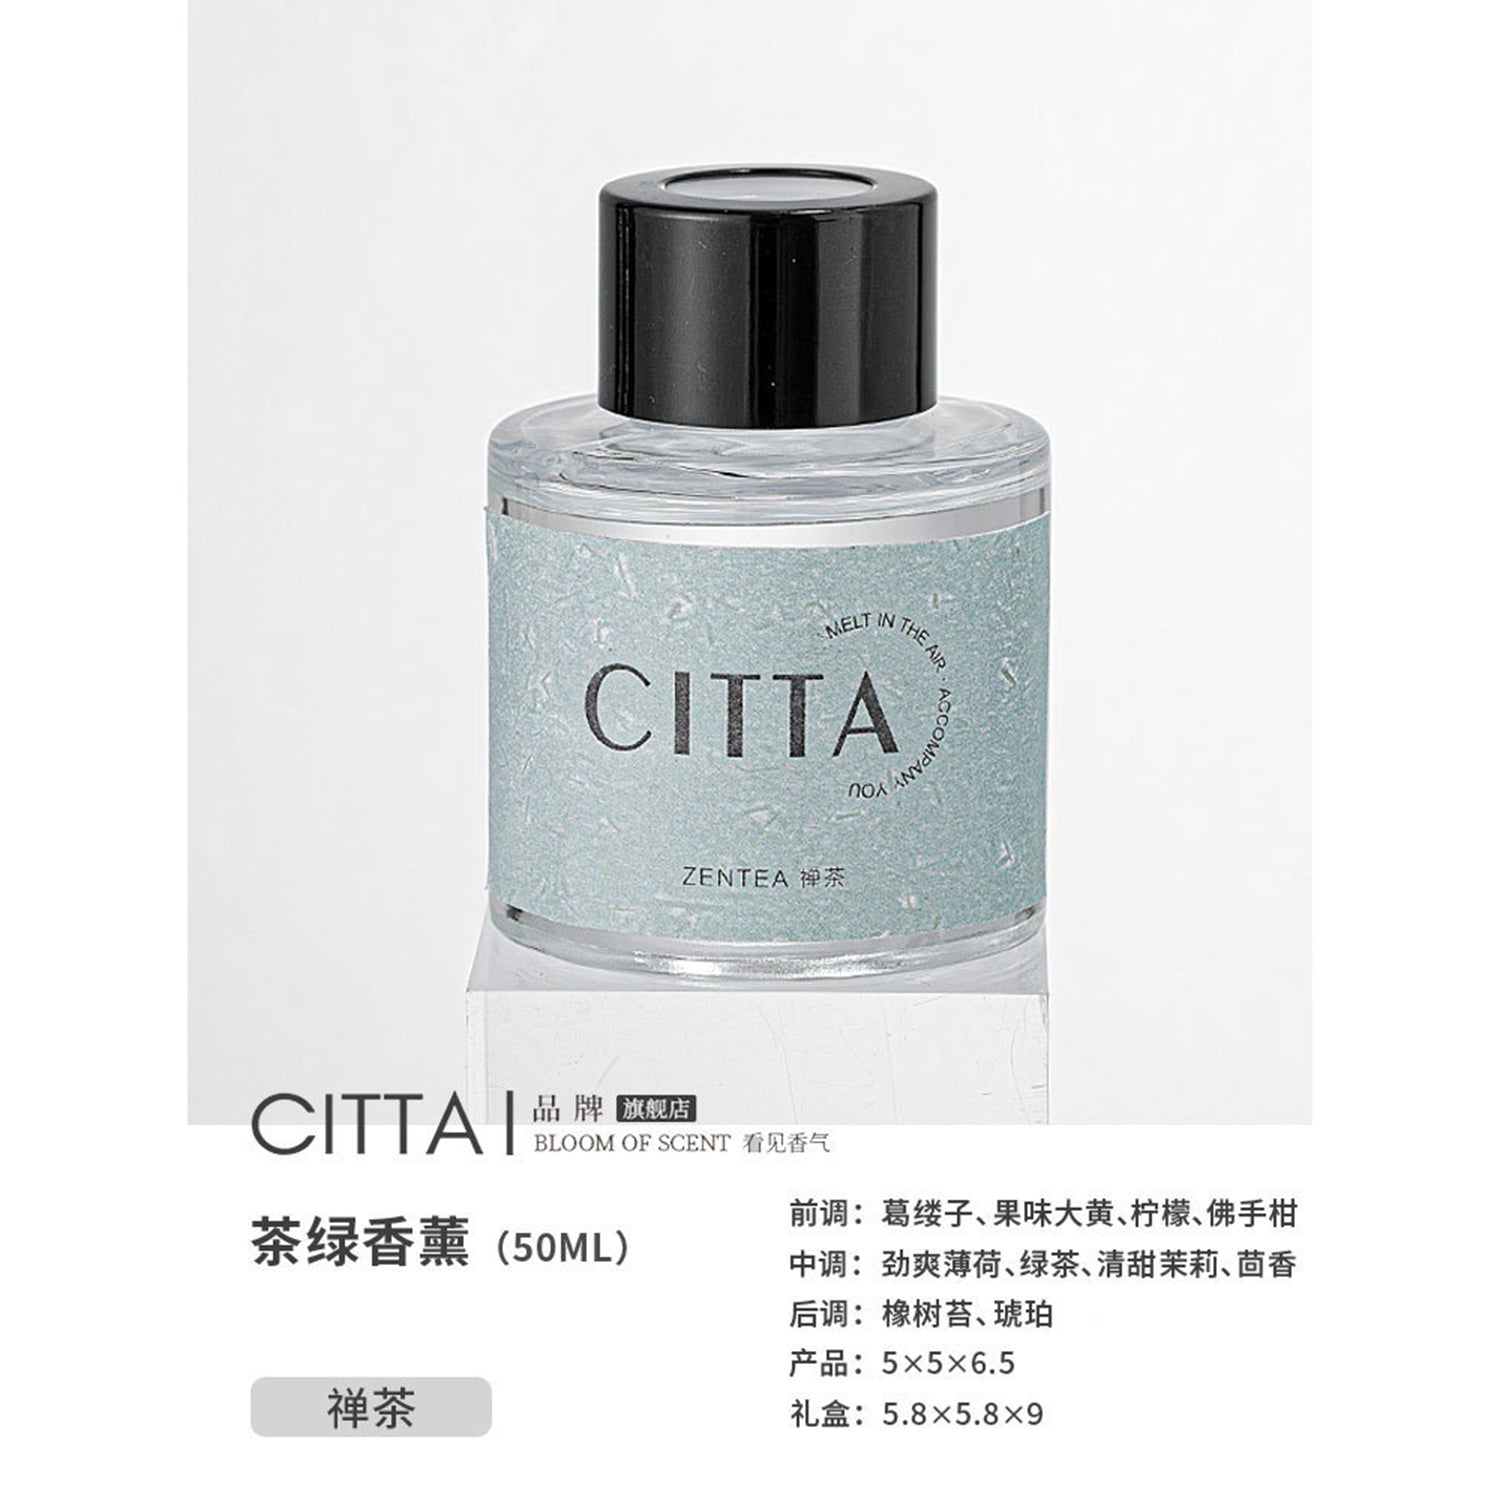 CITTA Car Aroma Fragrance 50ML Air Freshener Purifier Reed Diffuser with Silicone Anti-Slip Pad Car Fragrance CITTA Zen Tea 